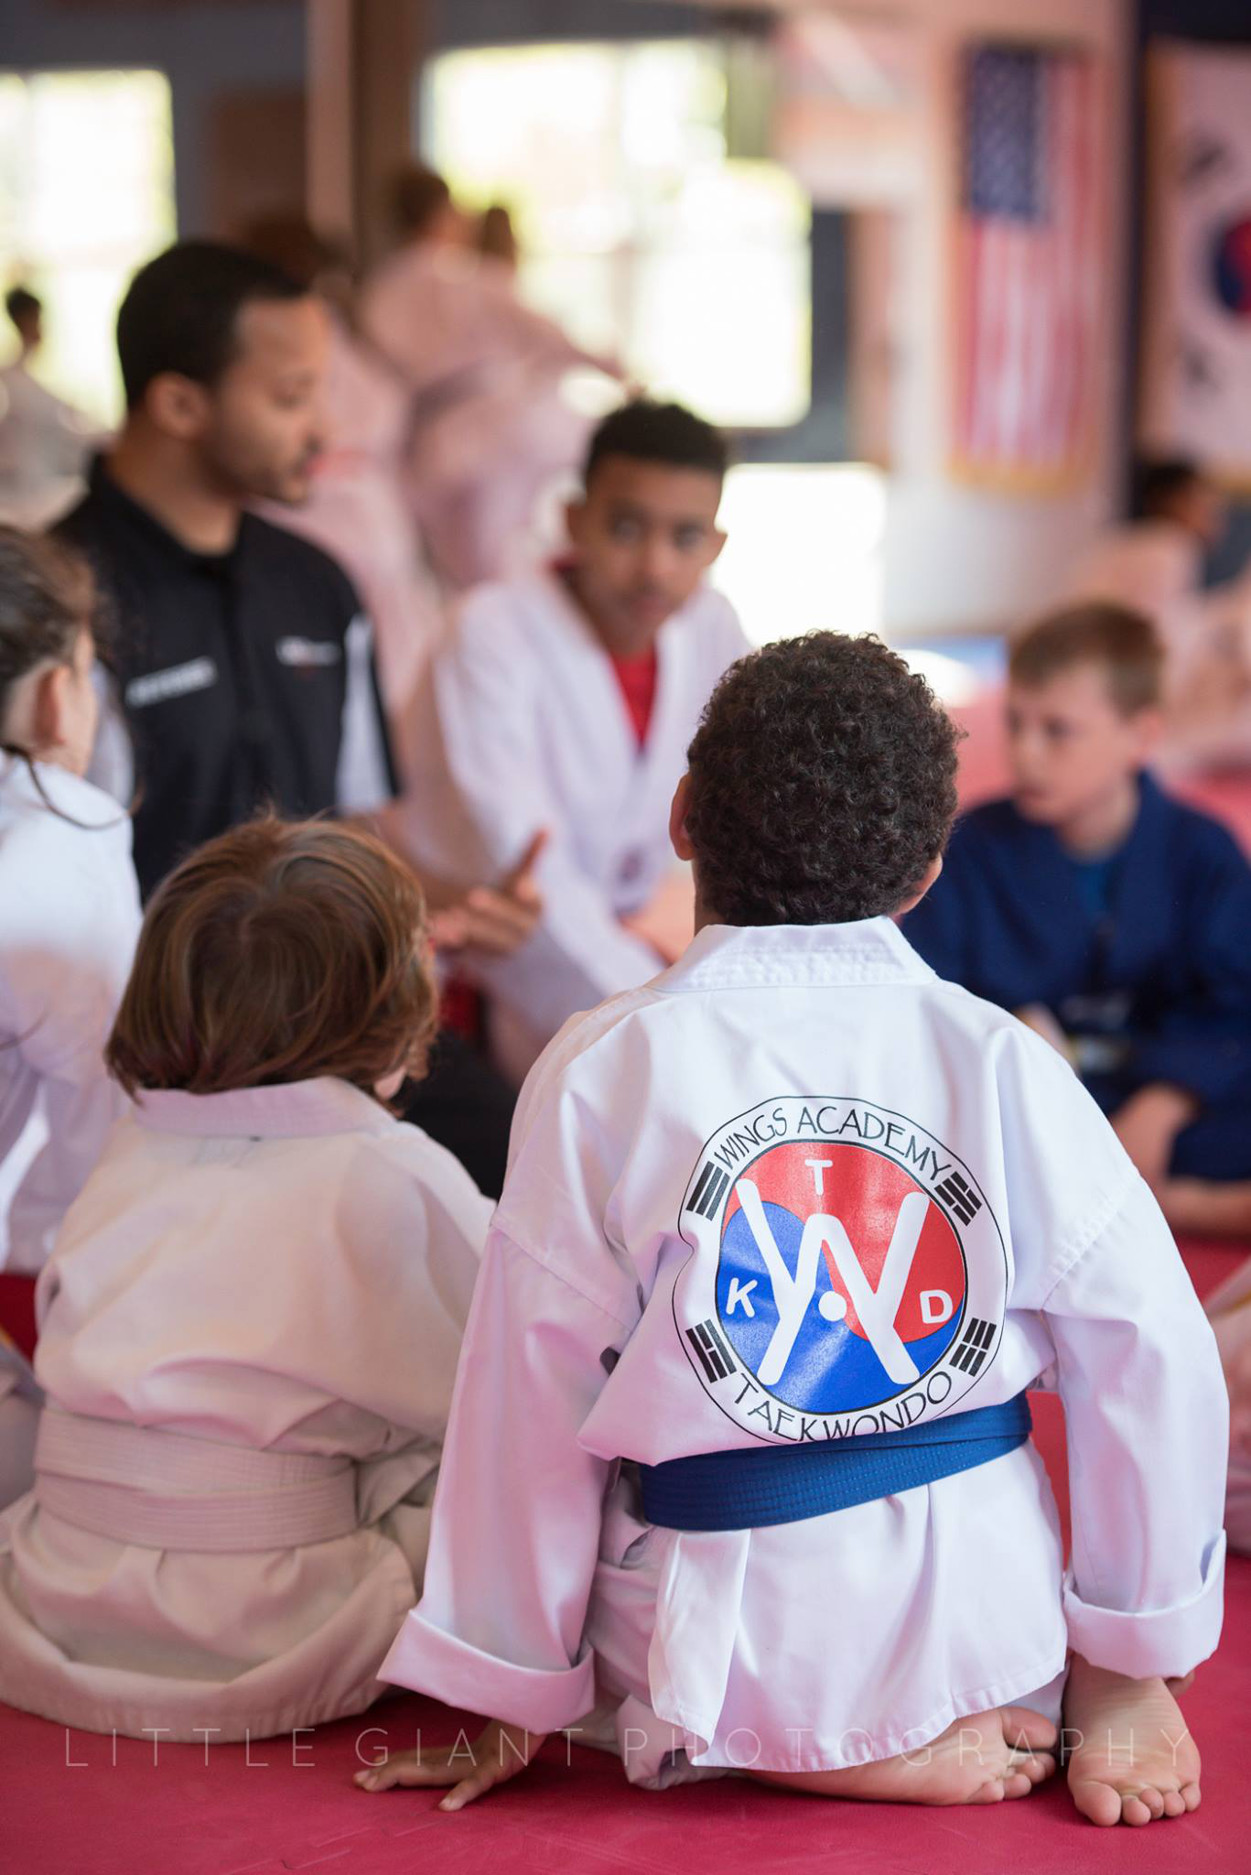 Wings Academy Taekwondo Offers image